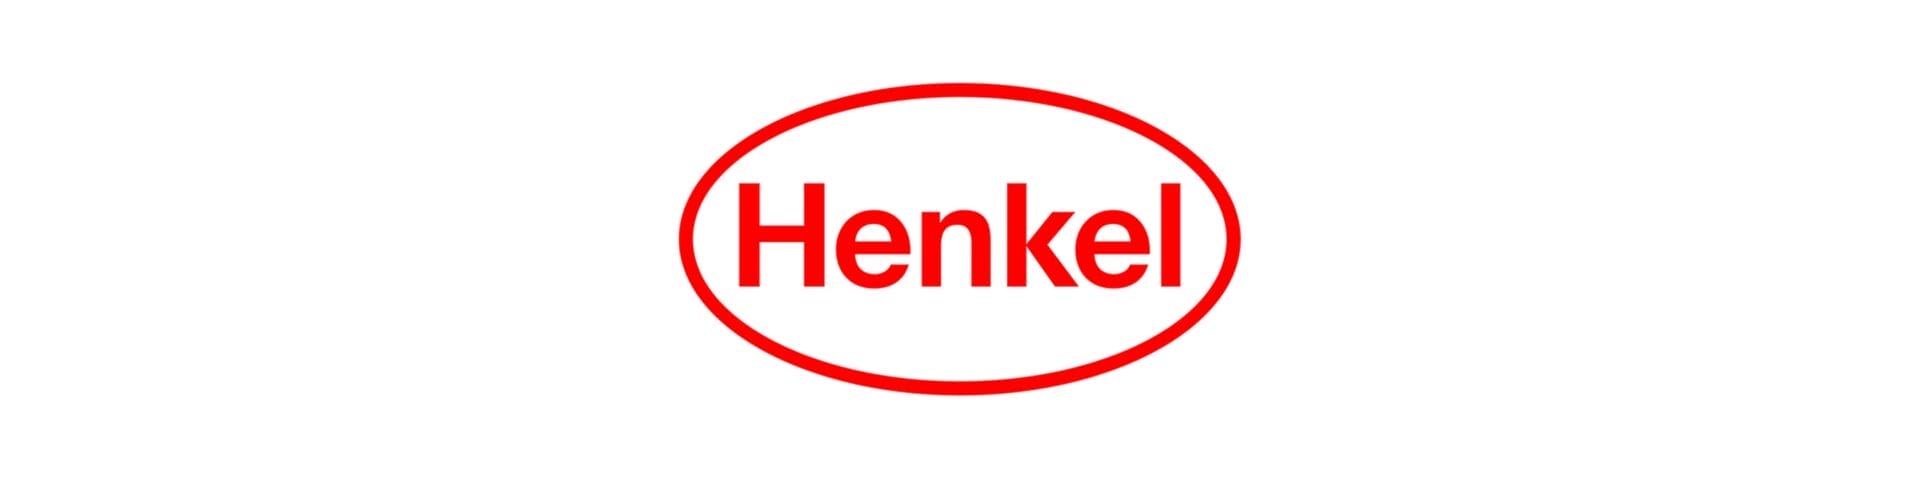 Euro Cosmetics Magazine - Henkel Logo